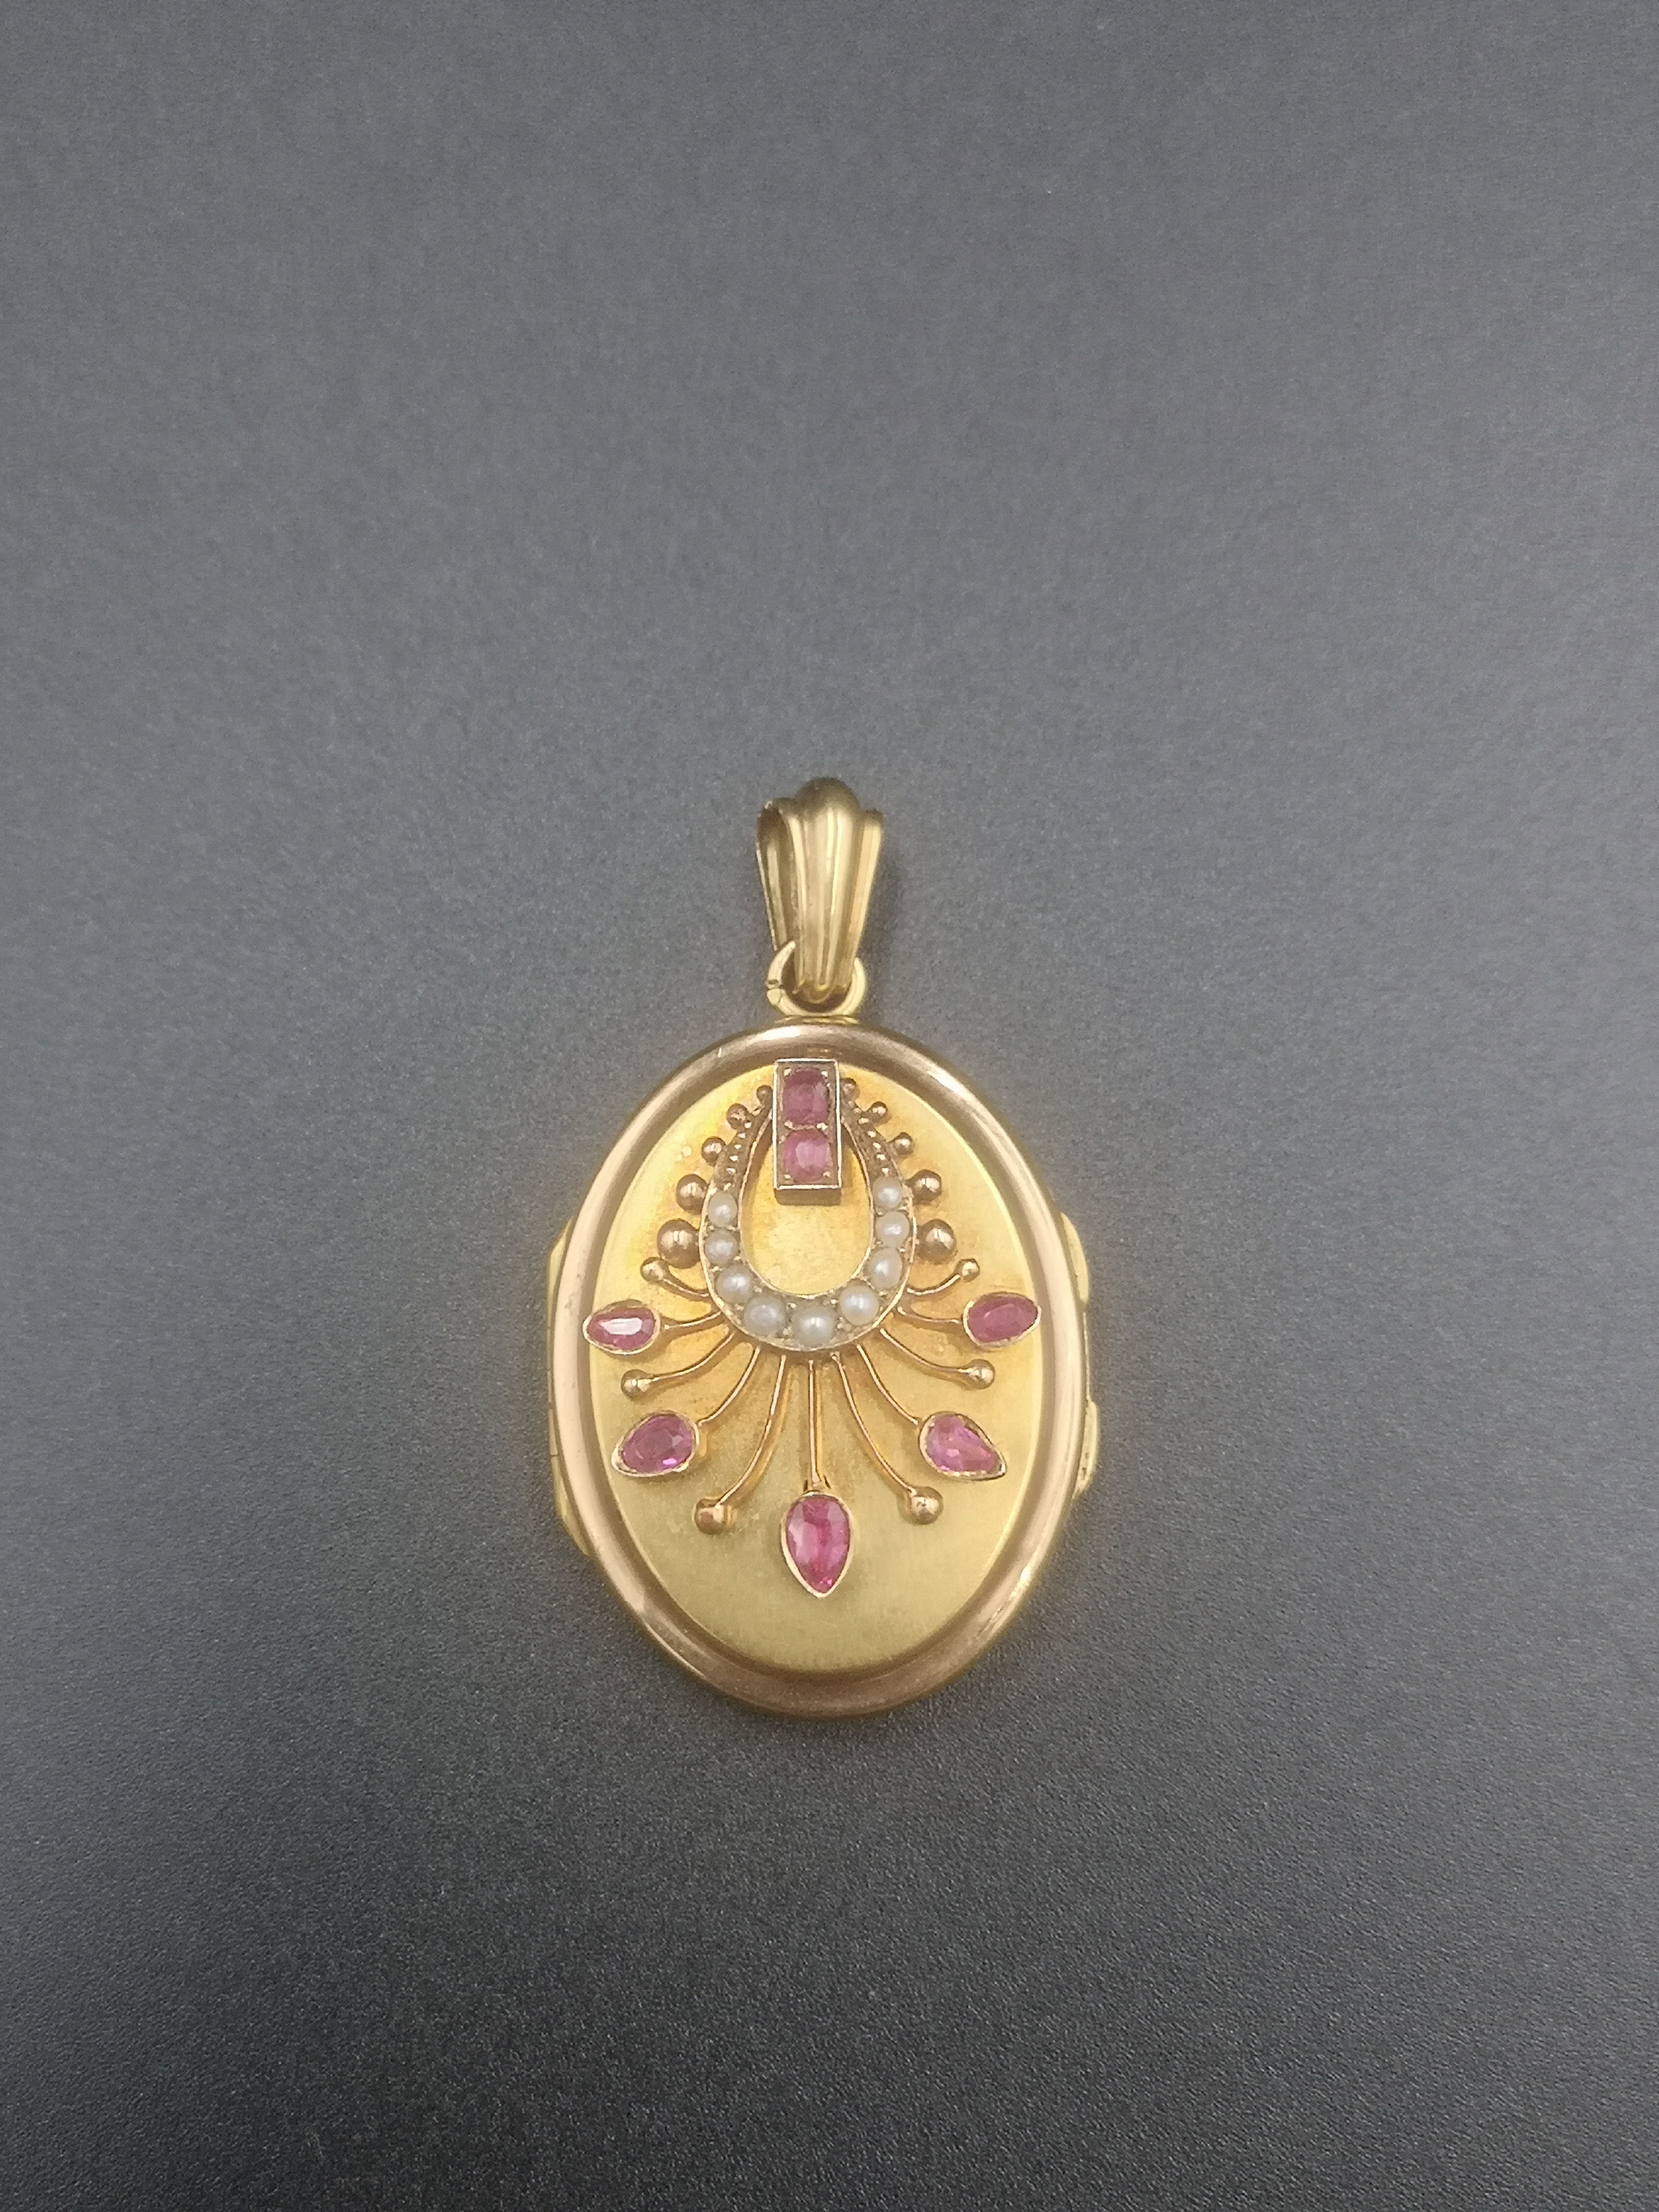 Victorian gold locket - Image 2 of 5